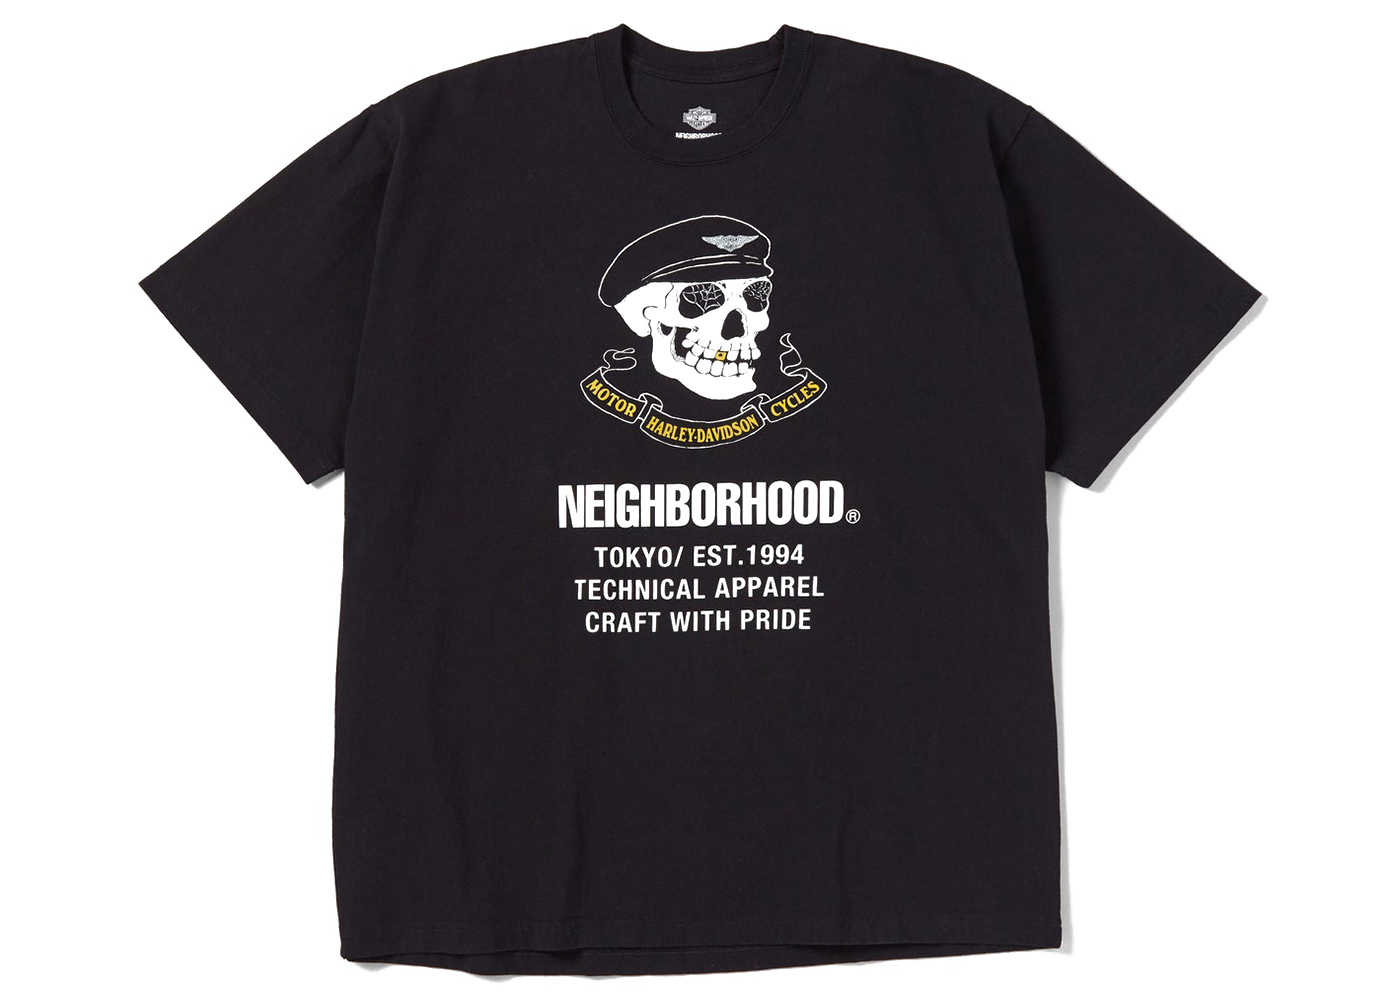 Neighborhood x Harley Davidson Cracked Print T-Shirt Black Men's 